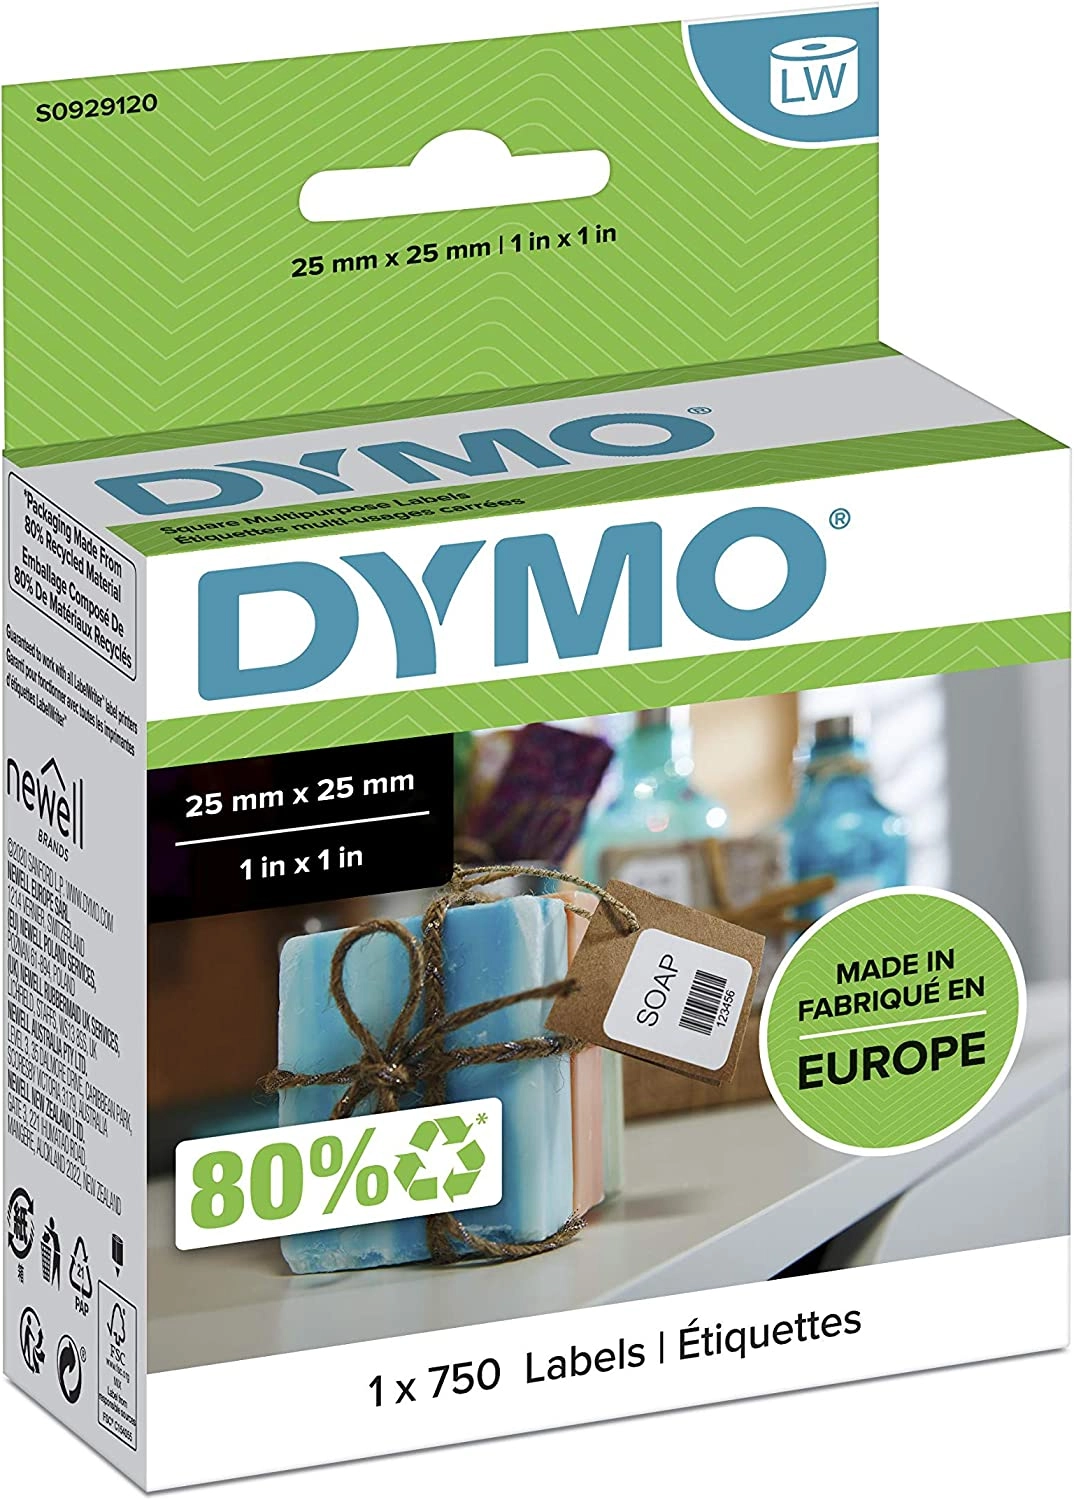 S0929120 Dymo LW 25mm x 25mm 750 Labels per Roll